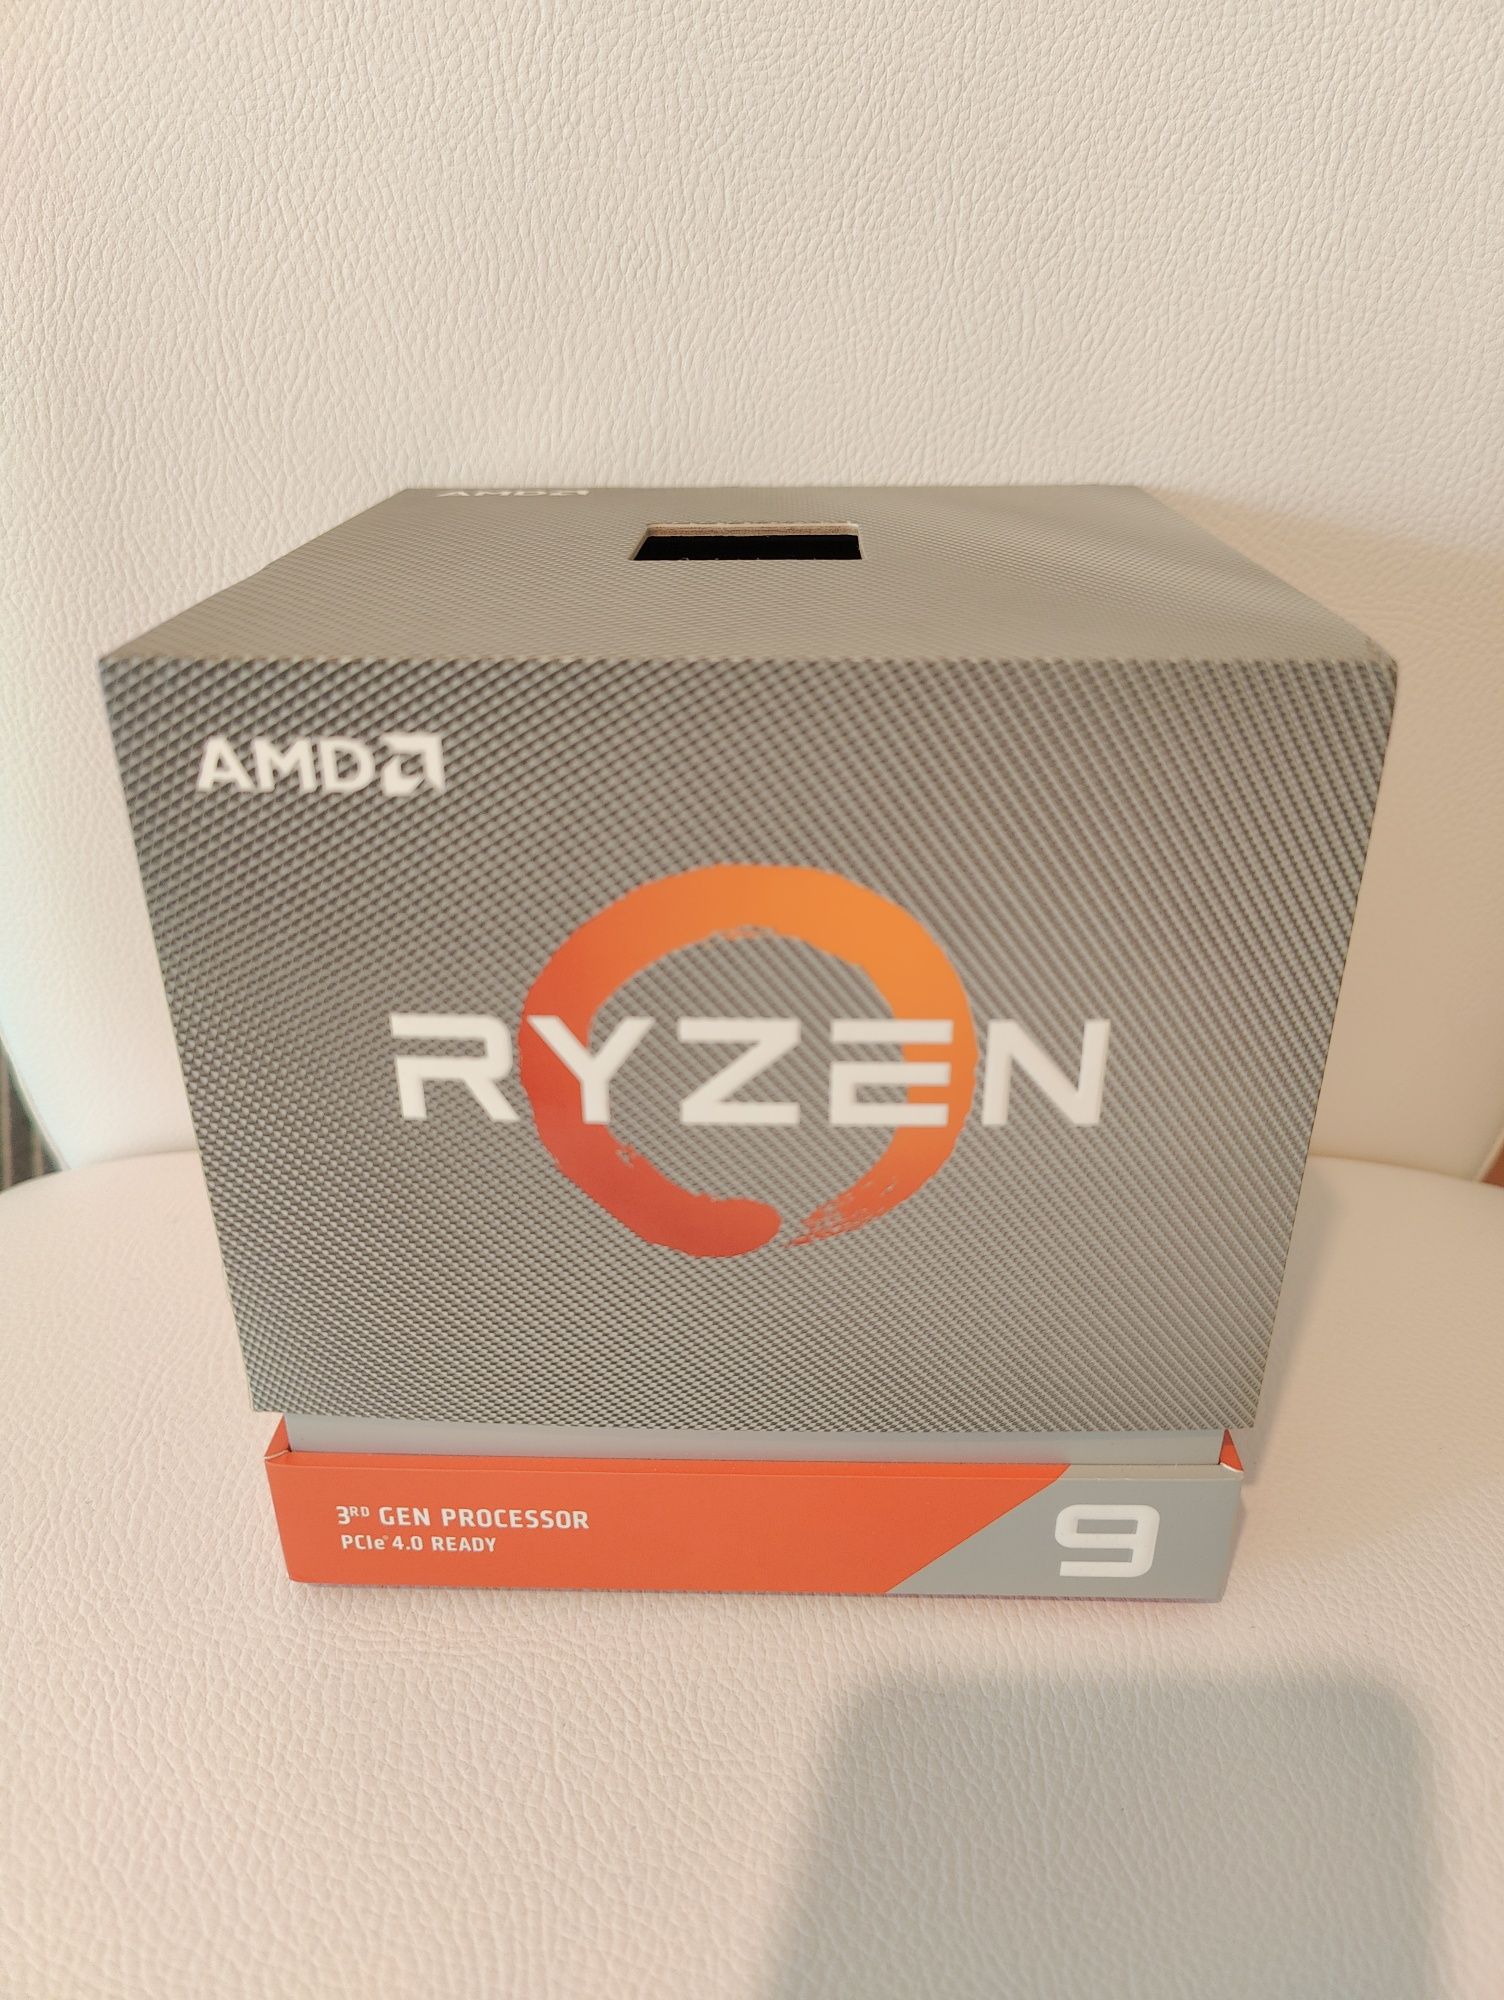 Processador AMD Ryzen 9 3900x